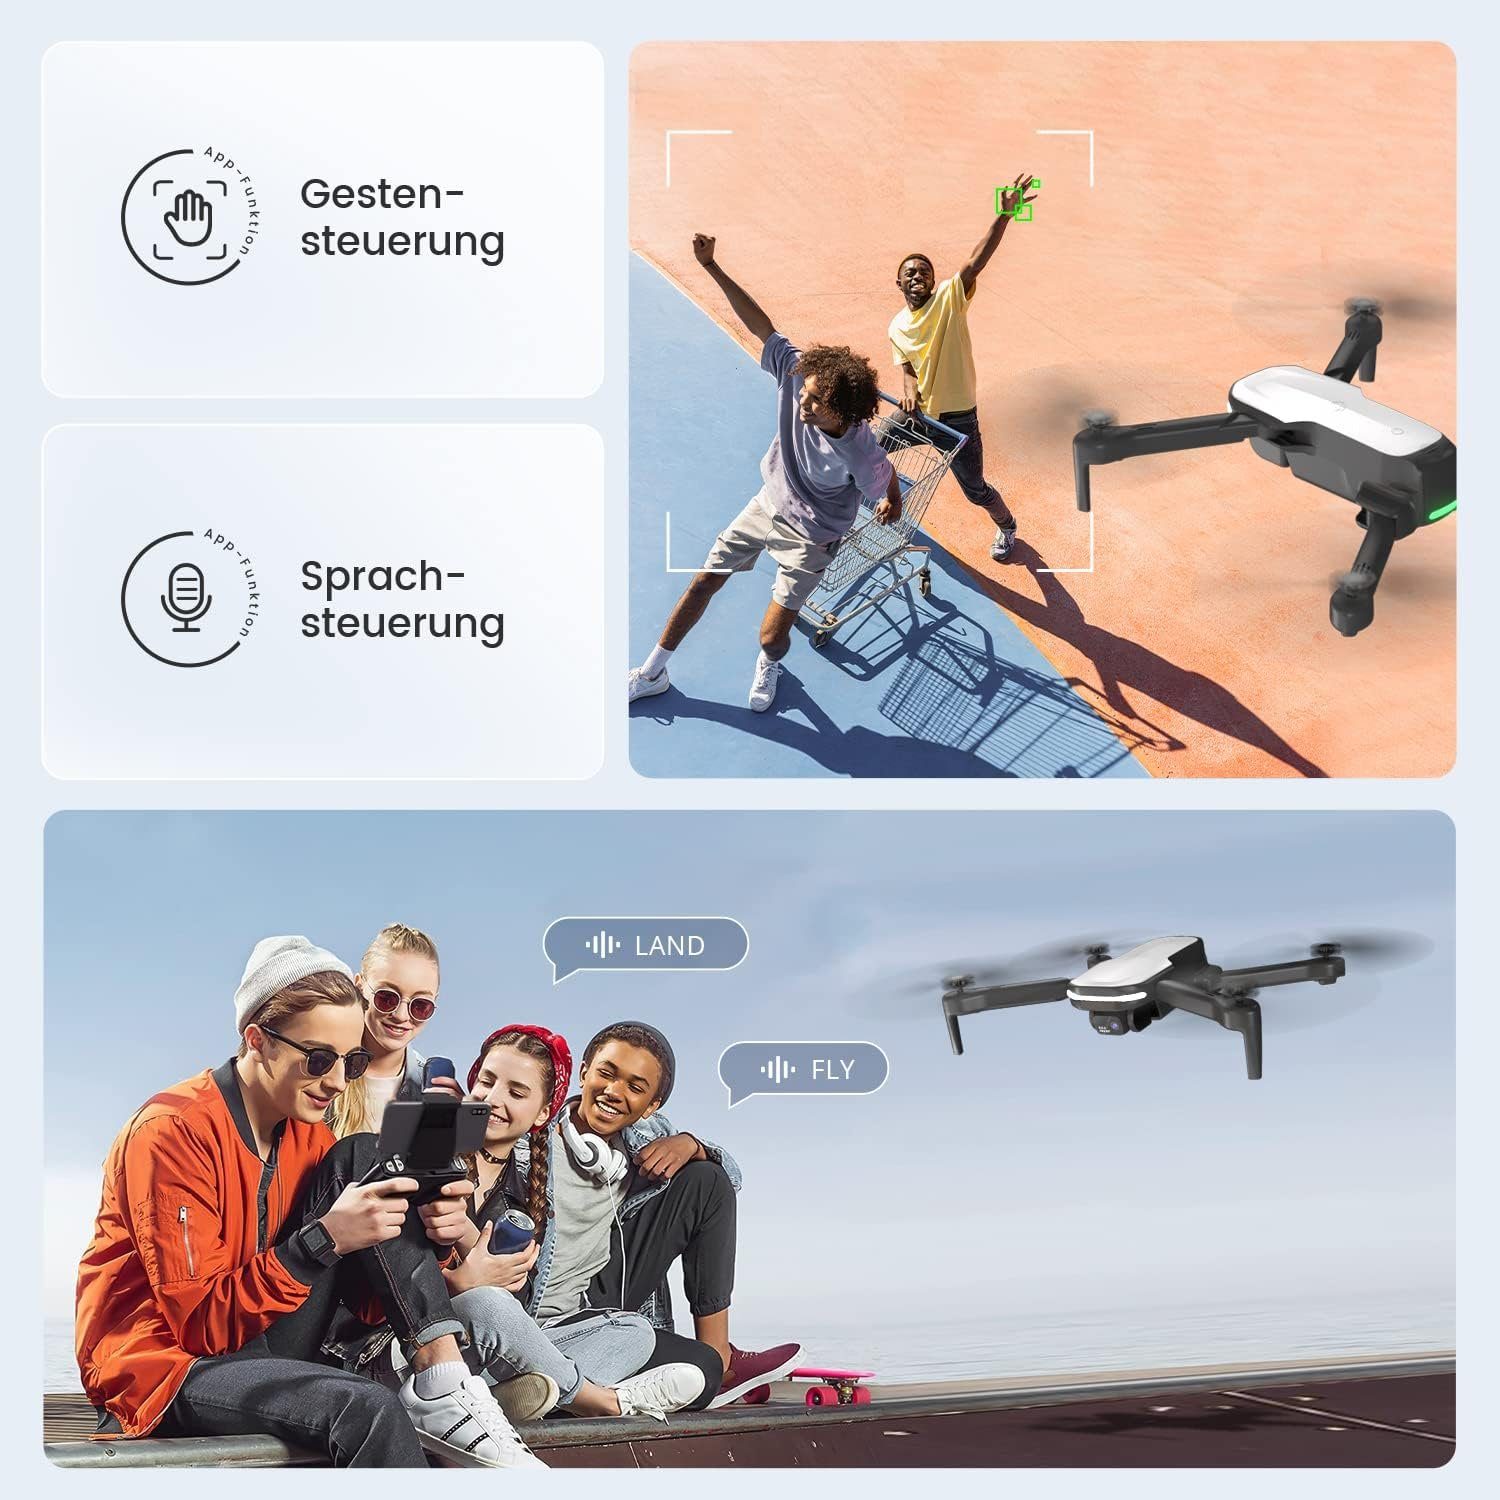 HOLY STONE Drohne (1080P, Drohne Kamera FPV 2 mit Flugzeit) Batterien Lange RC 1080P mit Faltbare